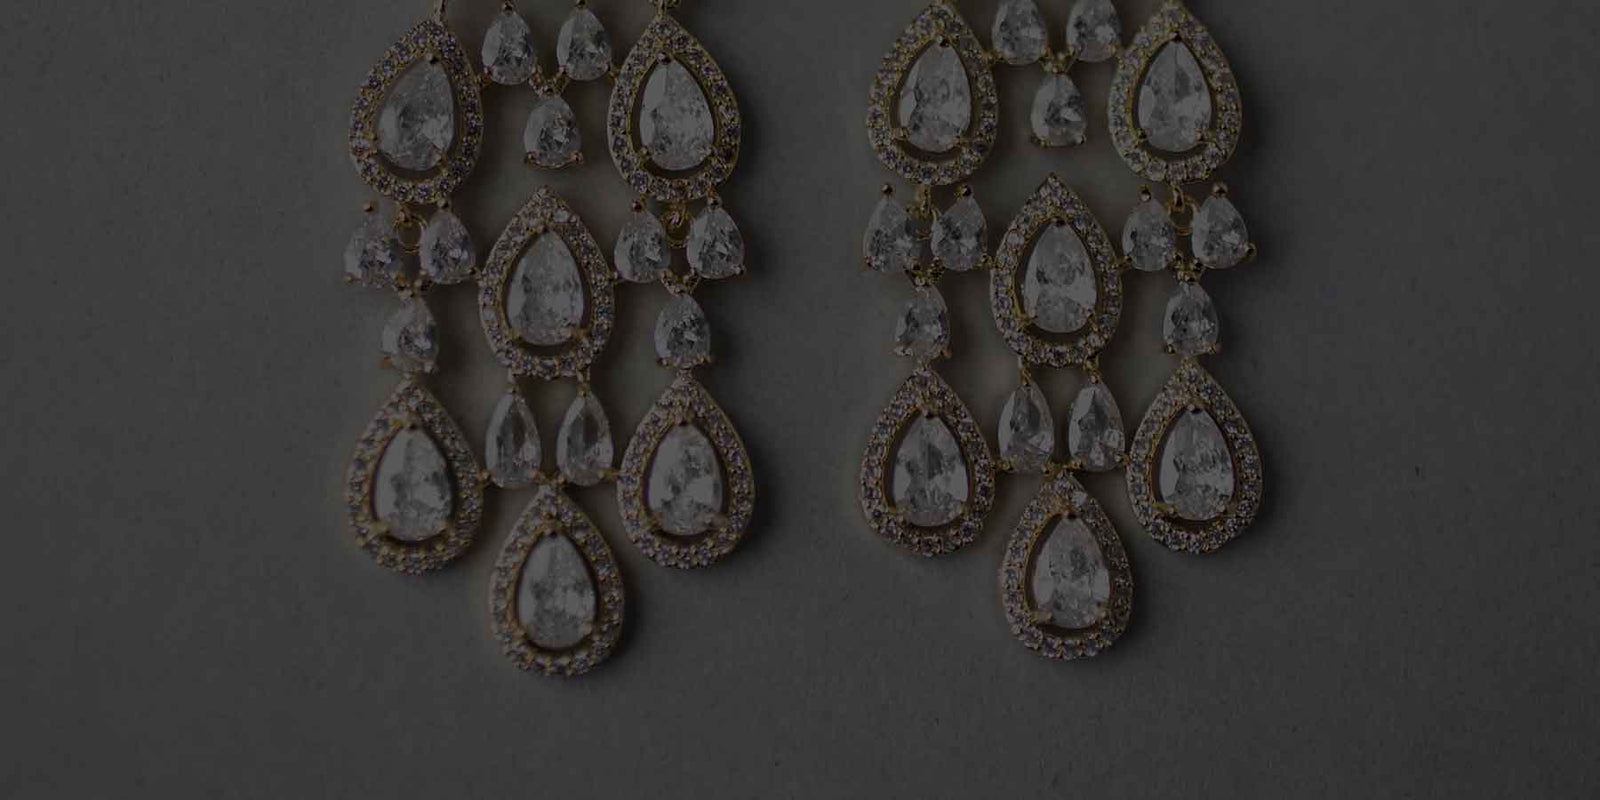 CZ Pear Drop Bridal Earrings